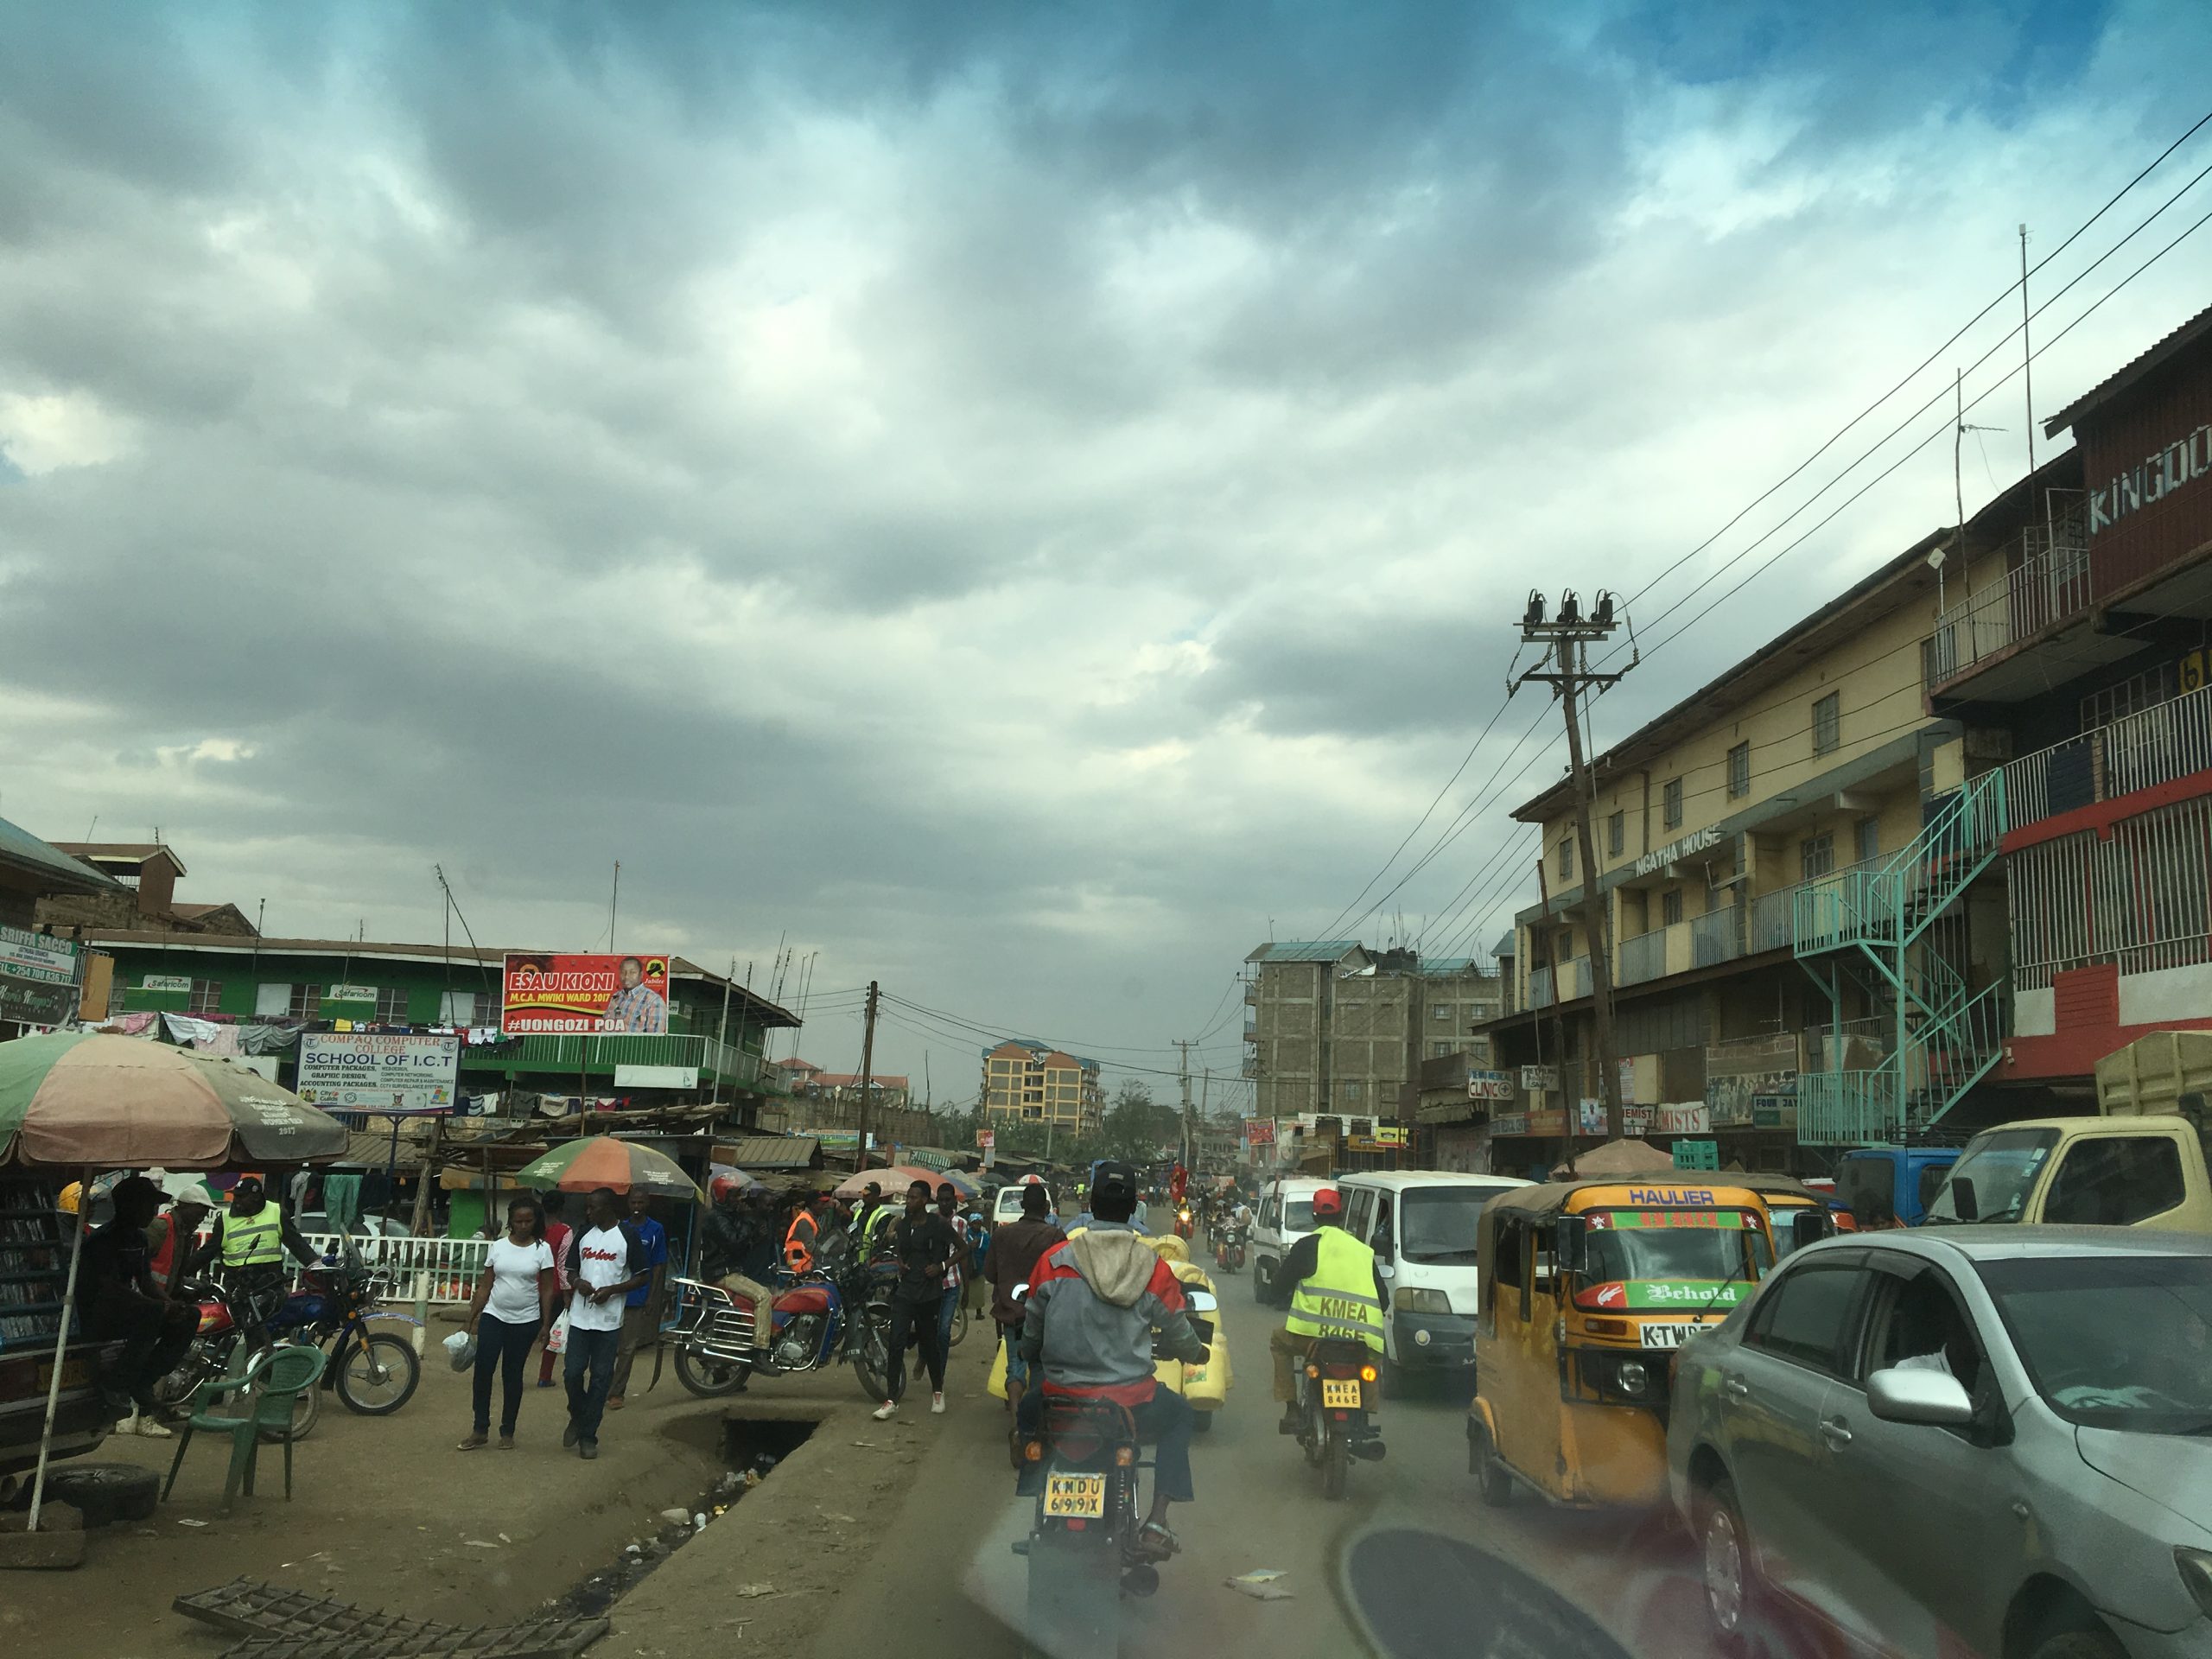 A busy street in Nairobi, Kenya